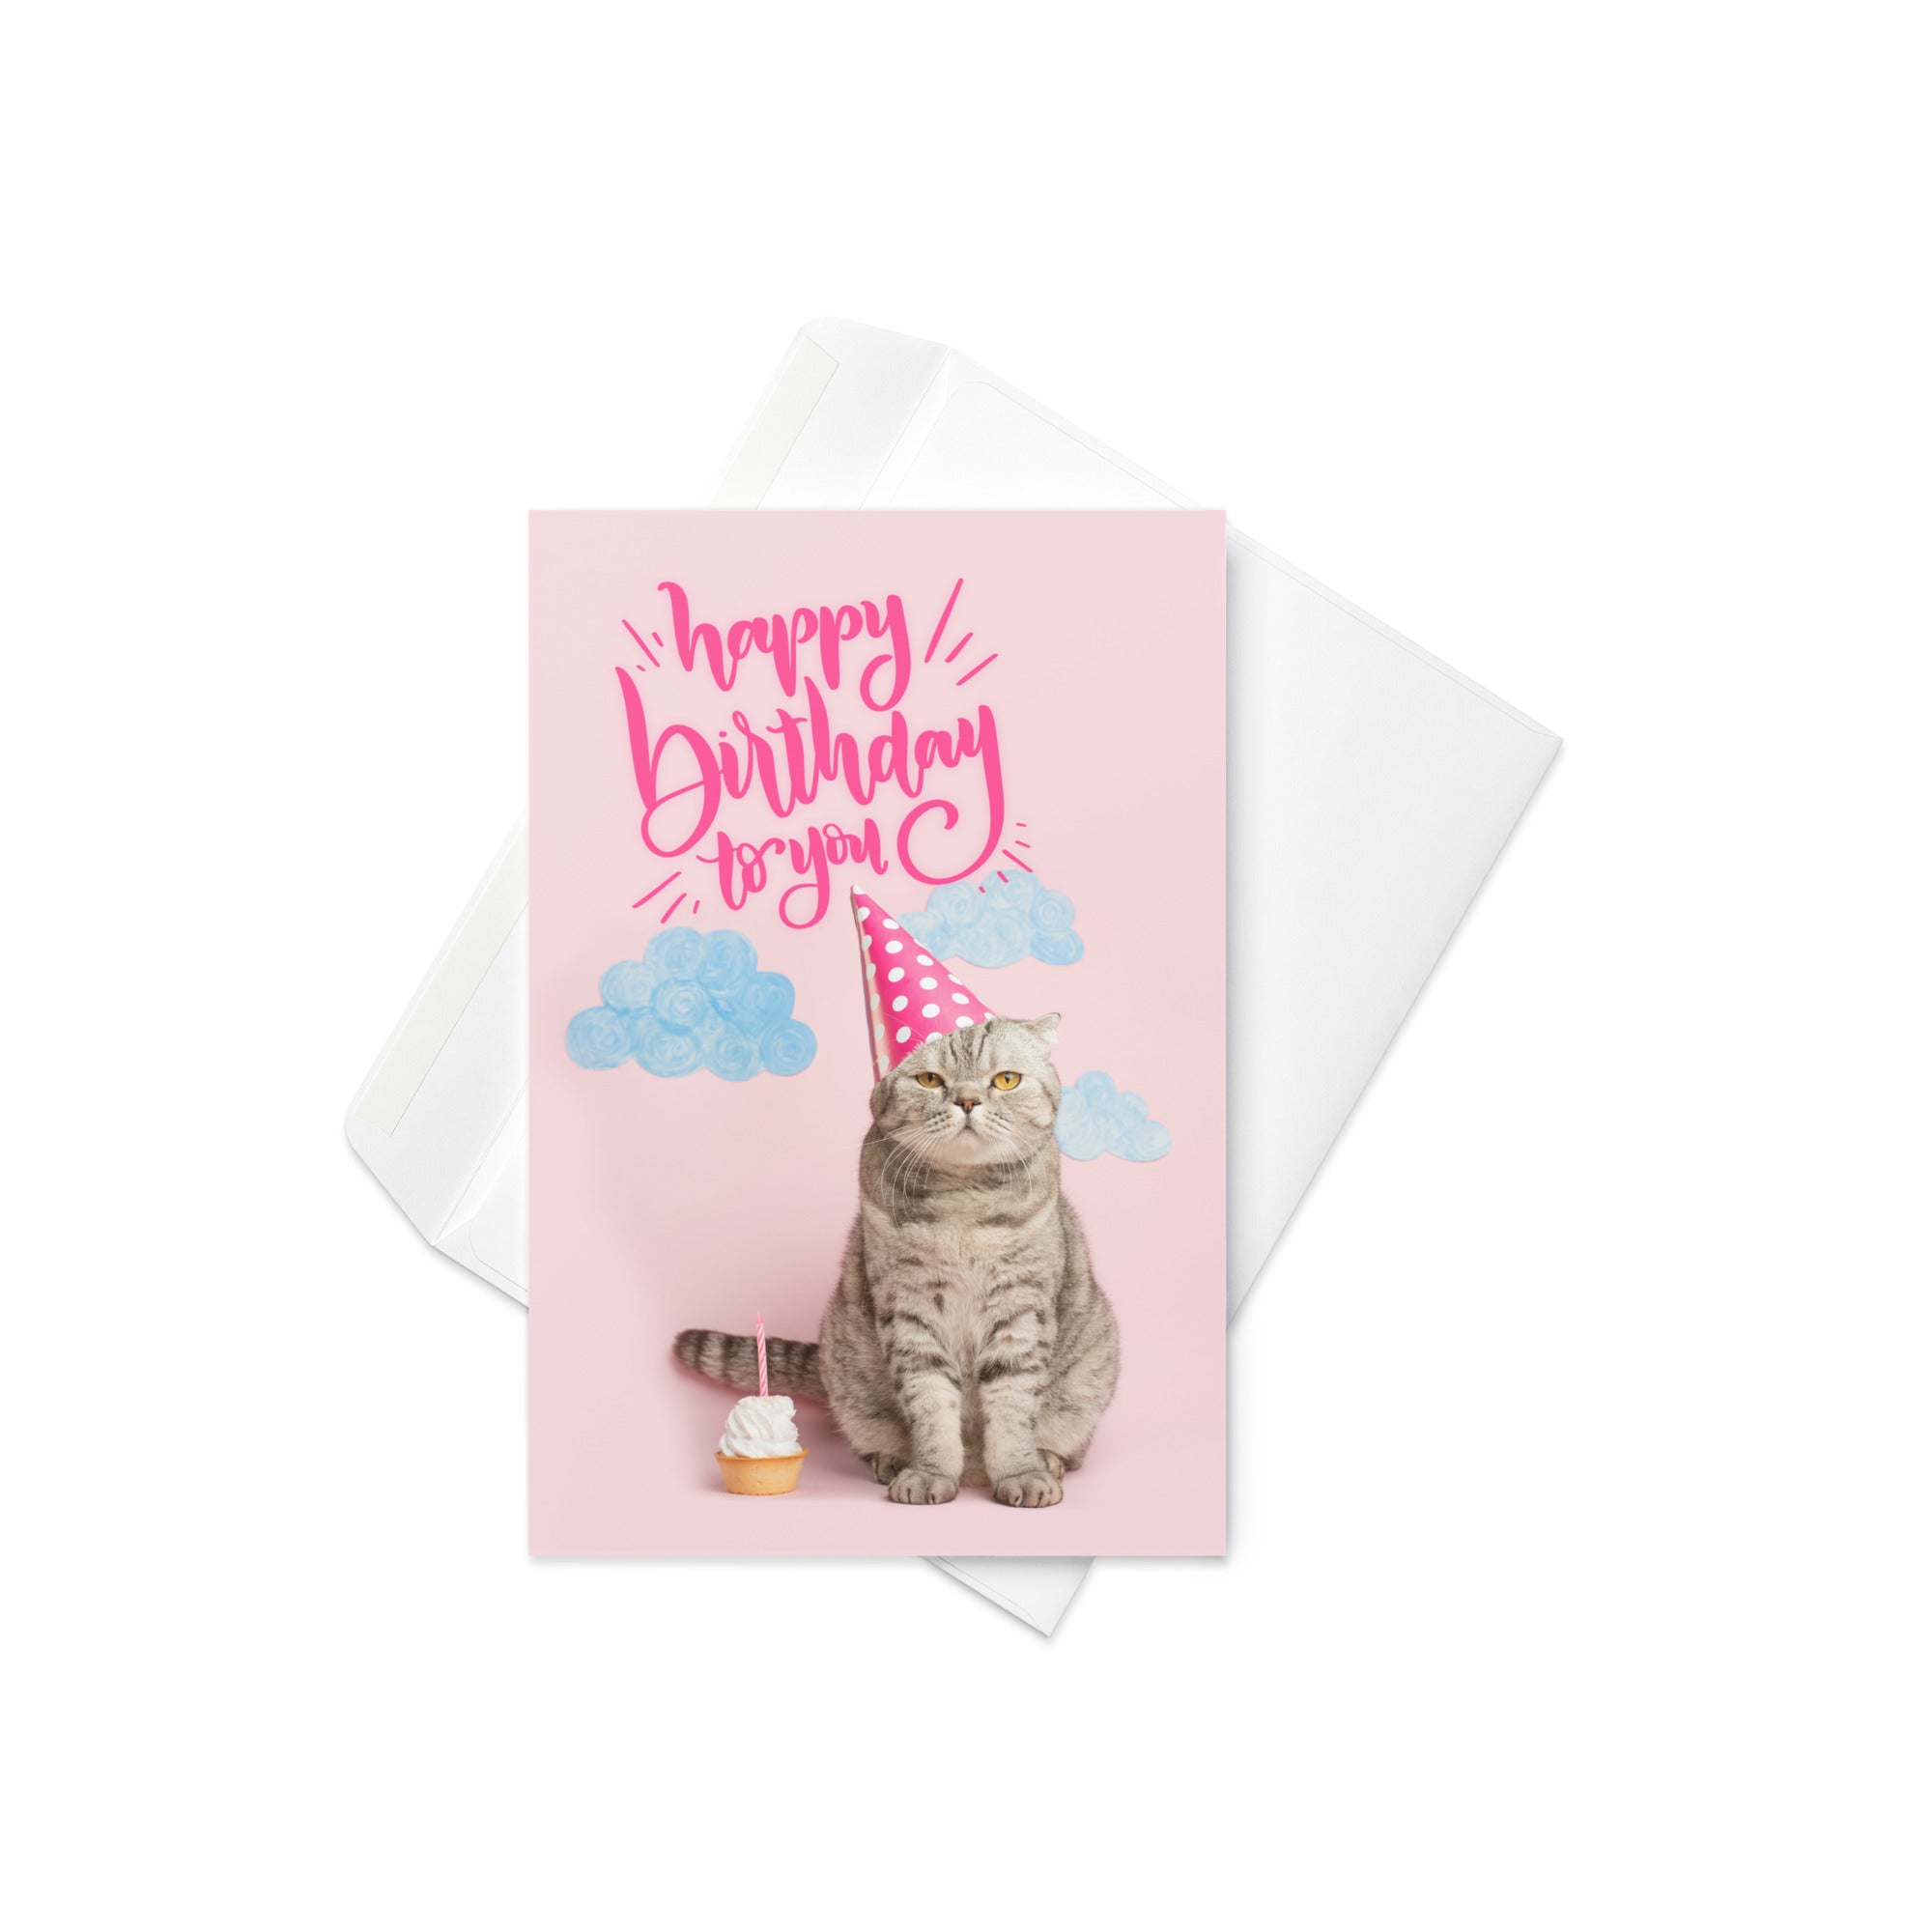 Happy Birthday (somehow grumpy cat) - Funny Birthday card